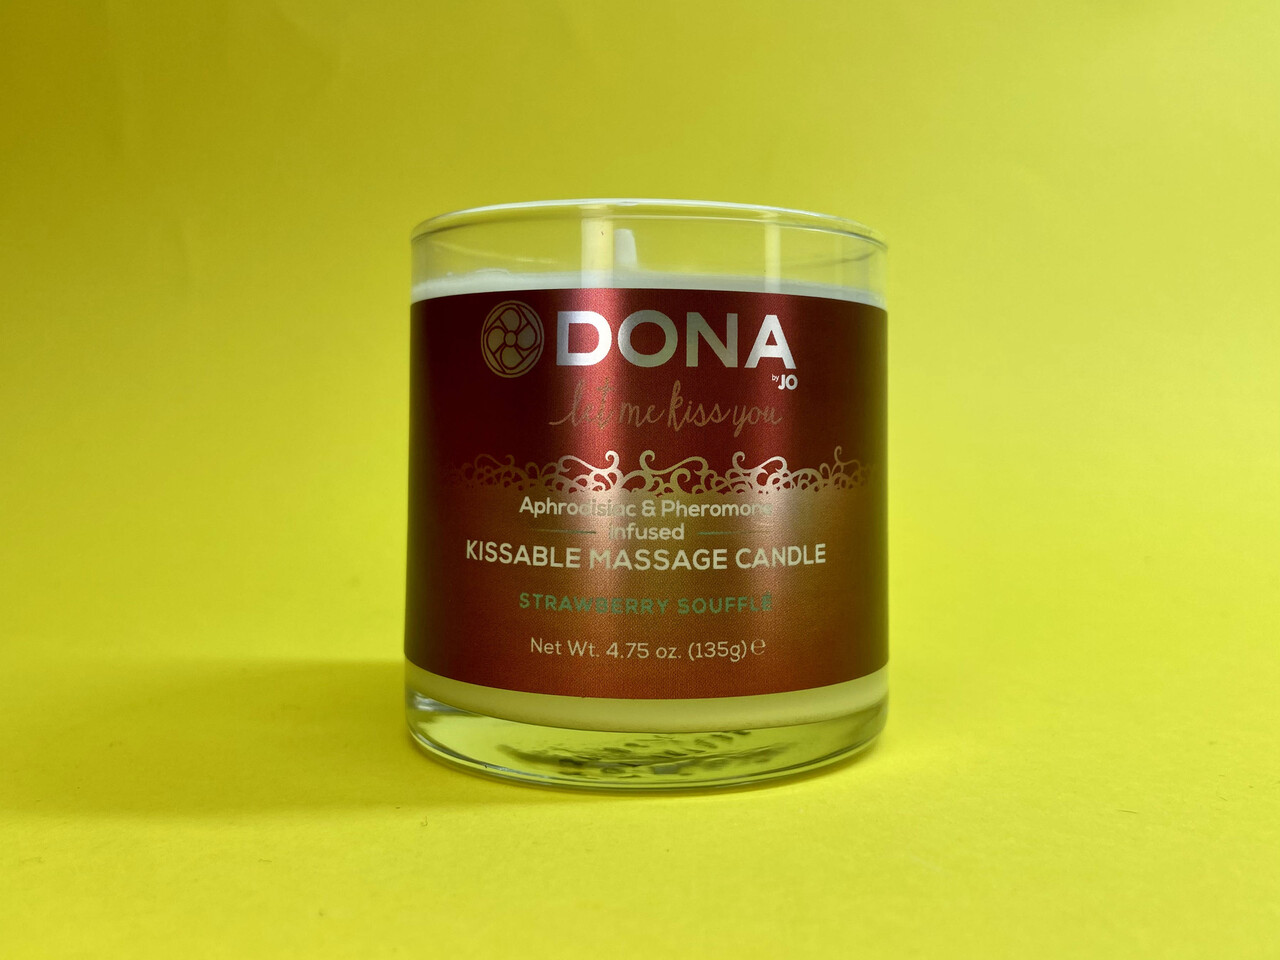 Свеча для массажа "Dona Kissable" - Фото №1